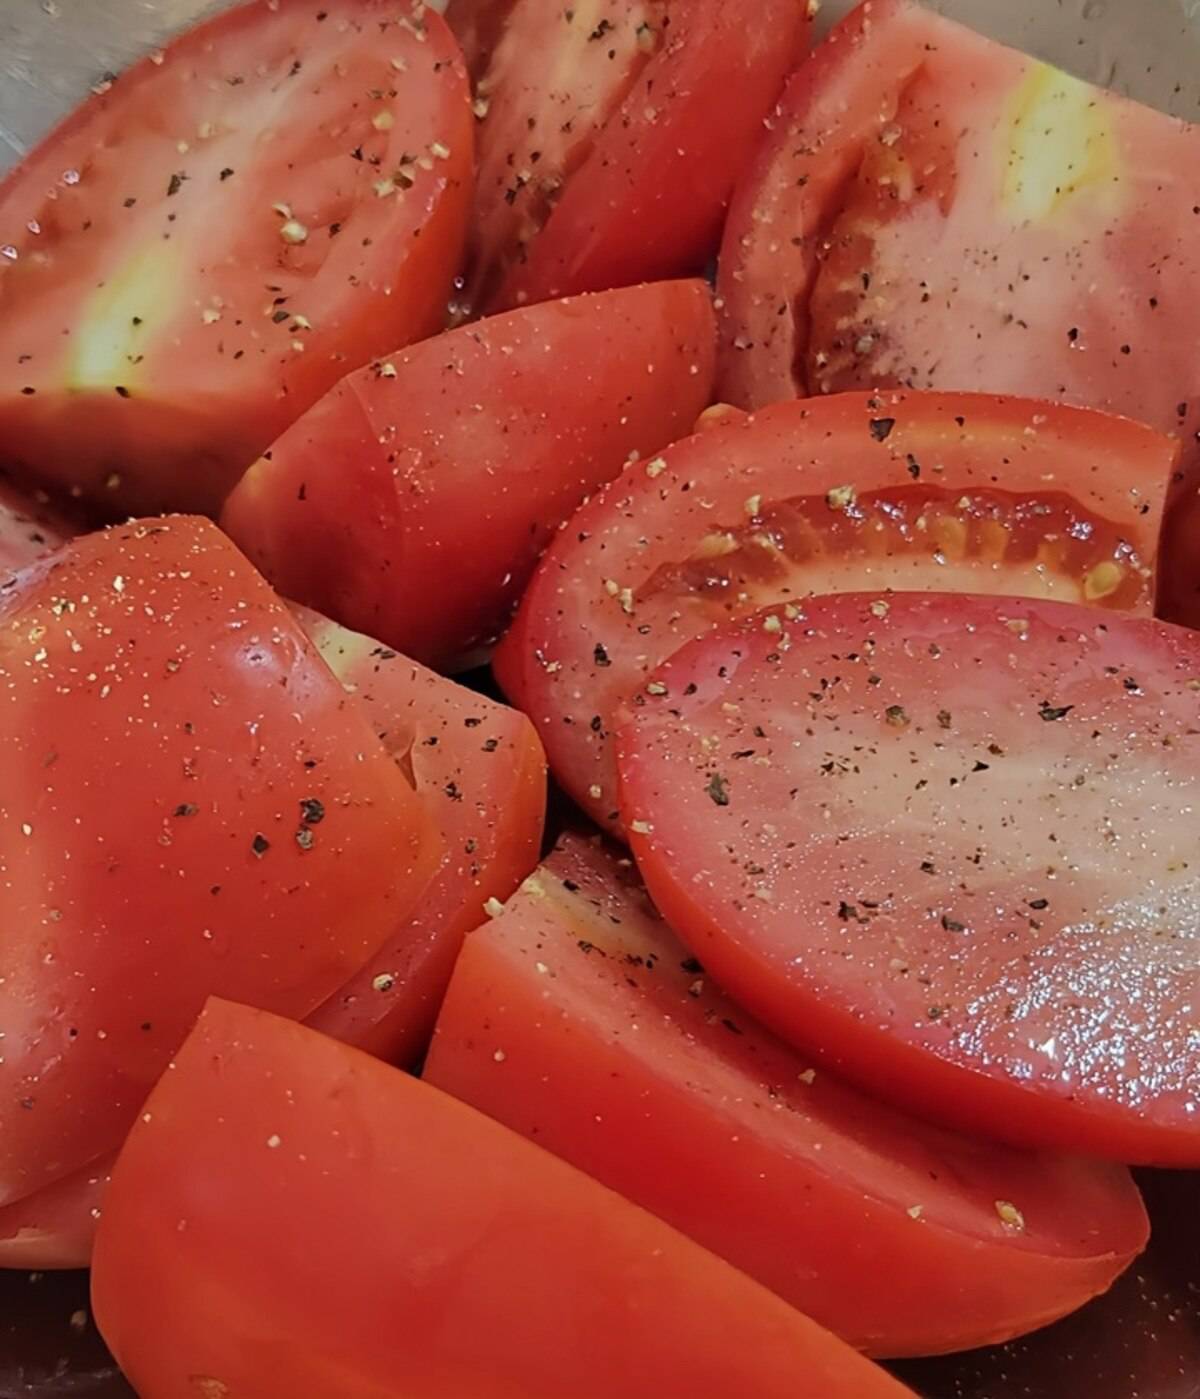 Tomatoes cut in half and seasoned